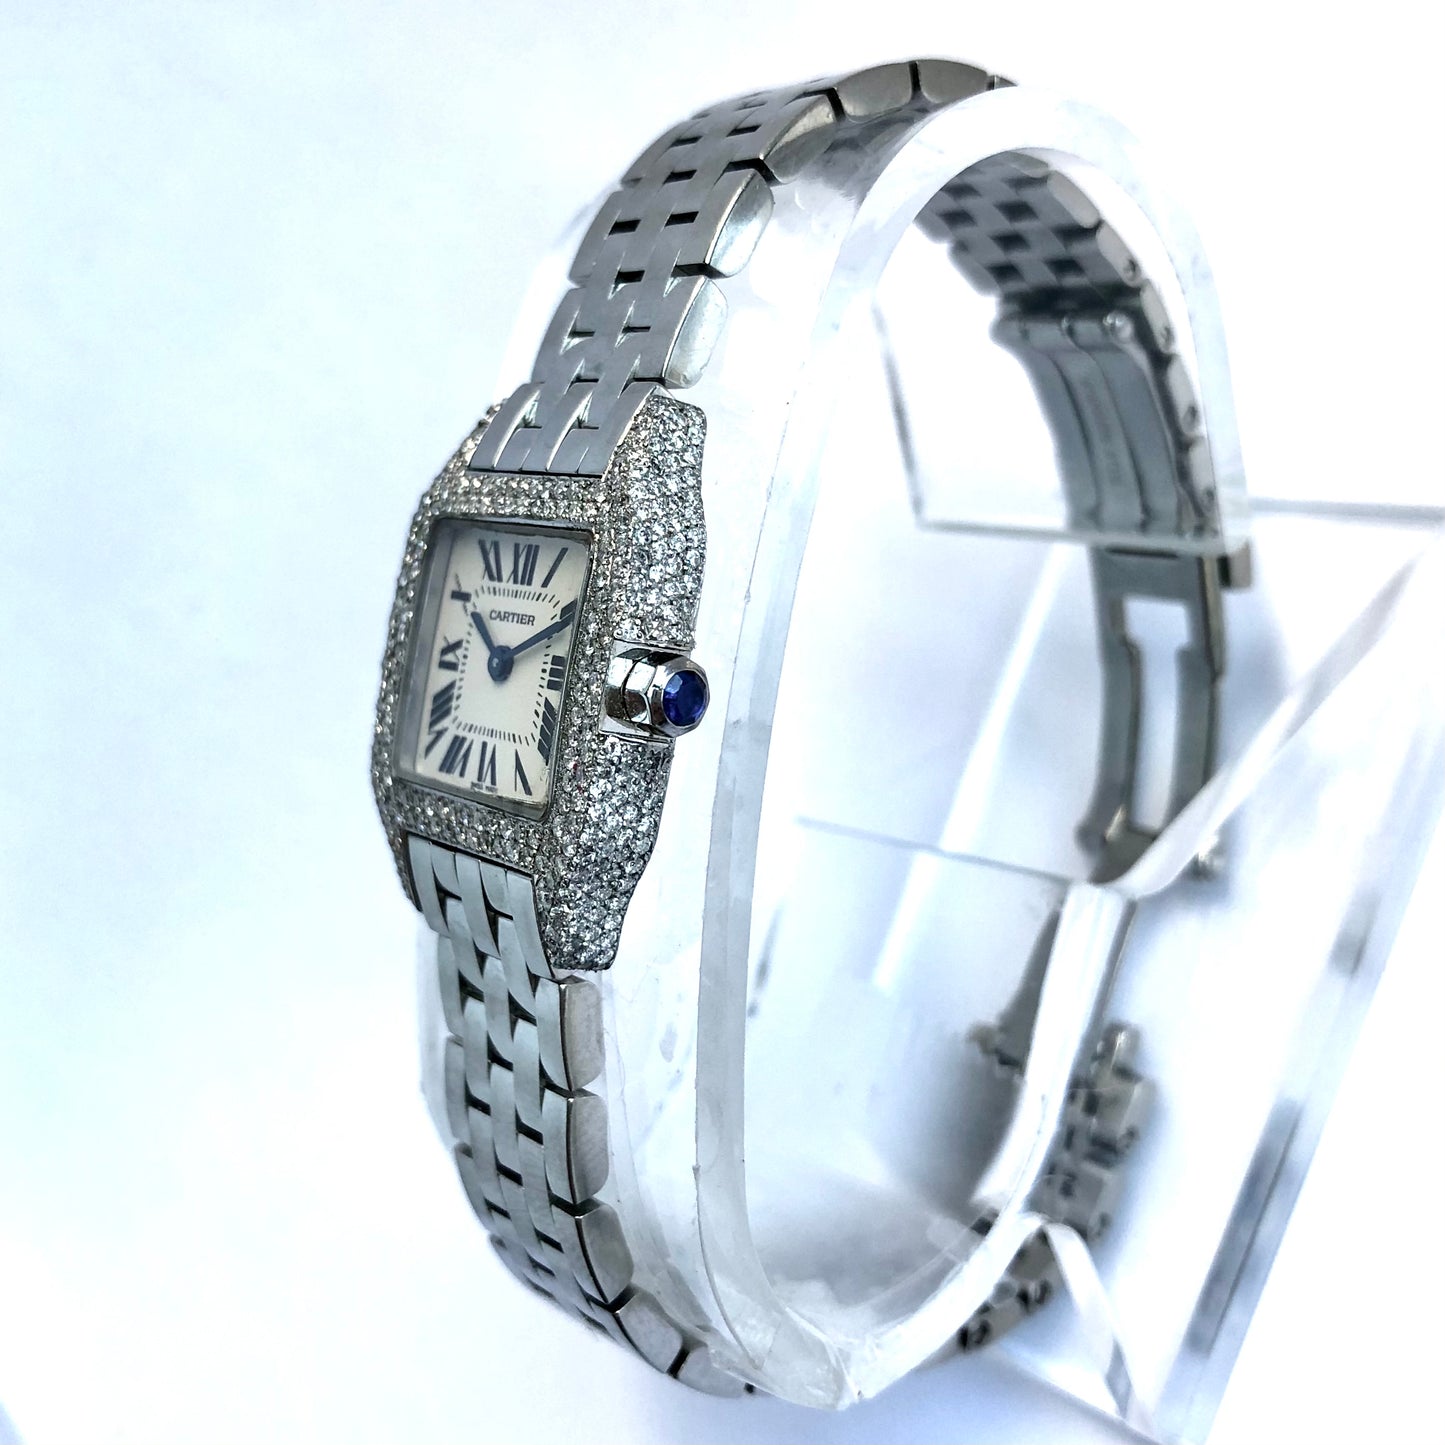 CARTIER SANTOS DEMOISELLE 2698 20mm Quartz Steel Diamond Watch